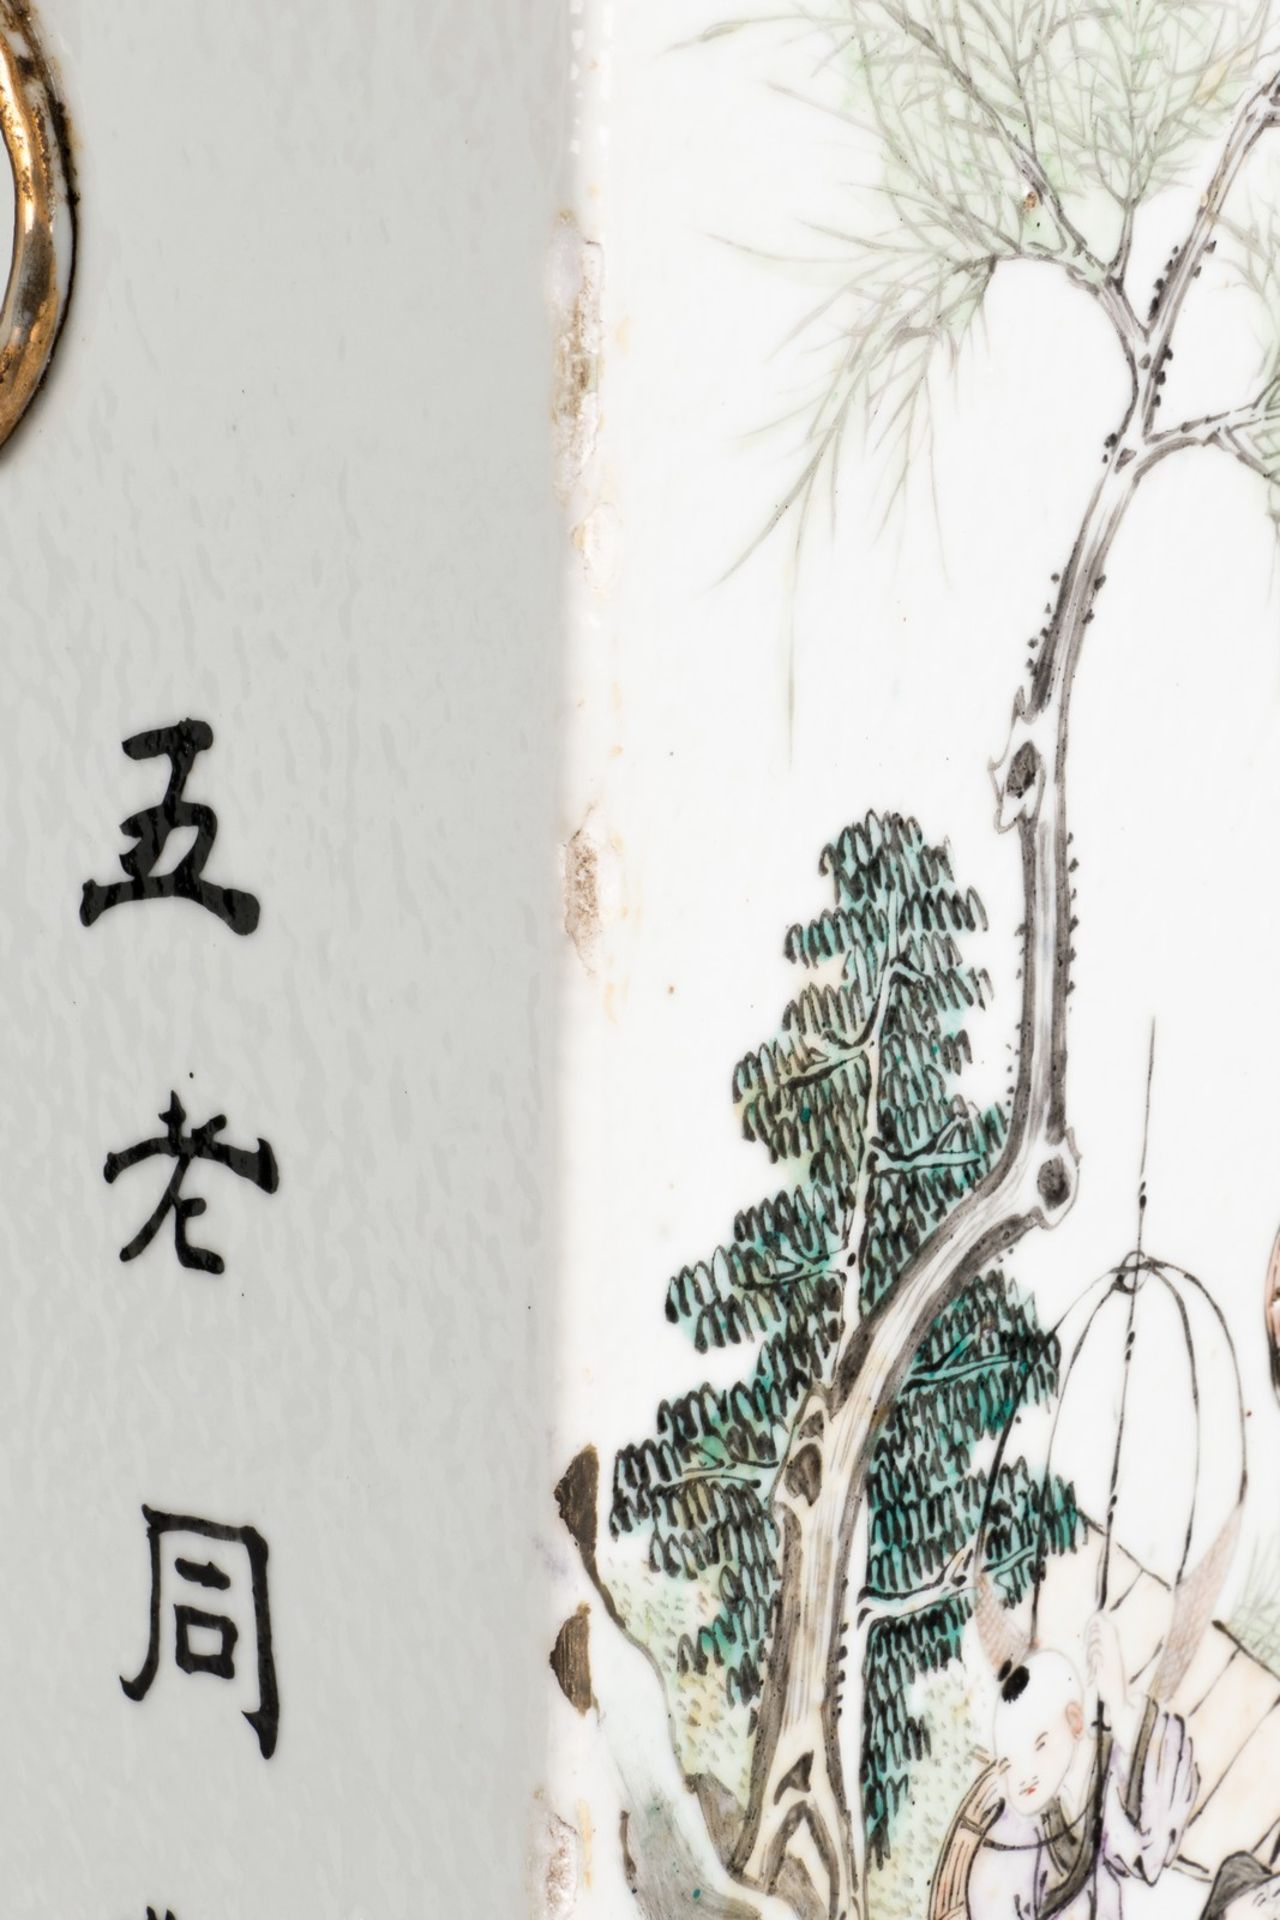 Two quadrangular vases, China, polychrome decorated with fishermen, literati and calligraphic texts, - Image 12 of 18